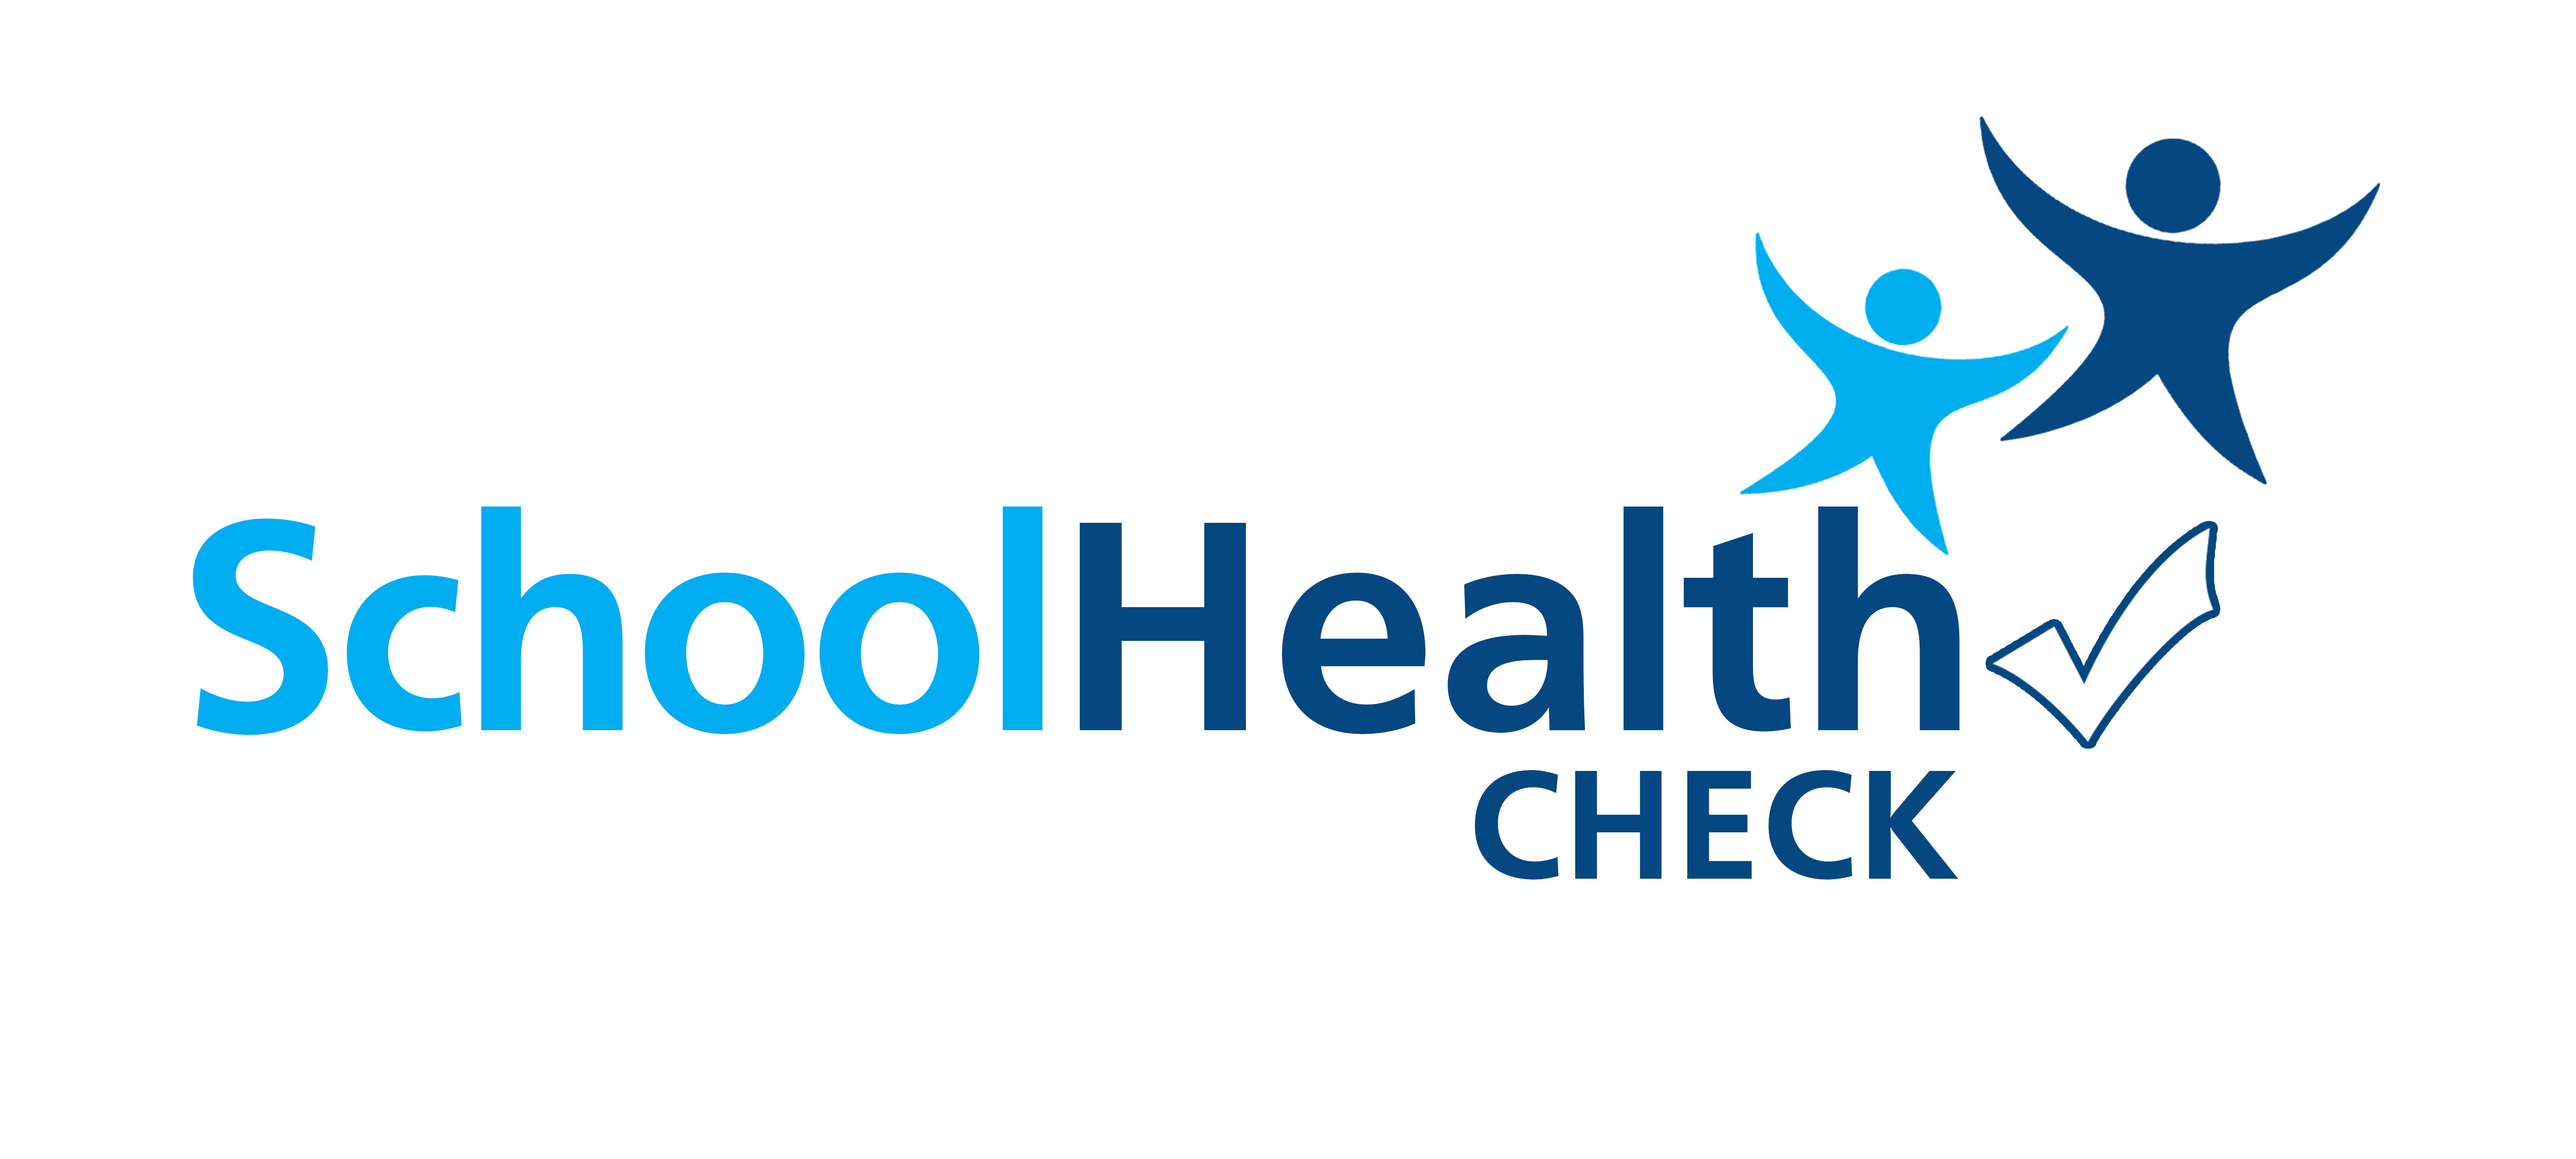 School Health Check